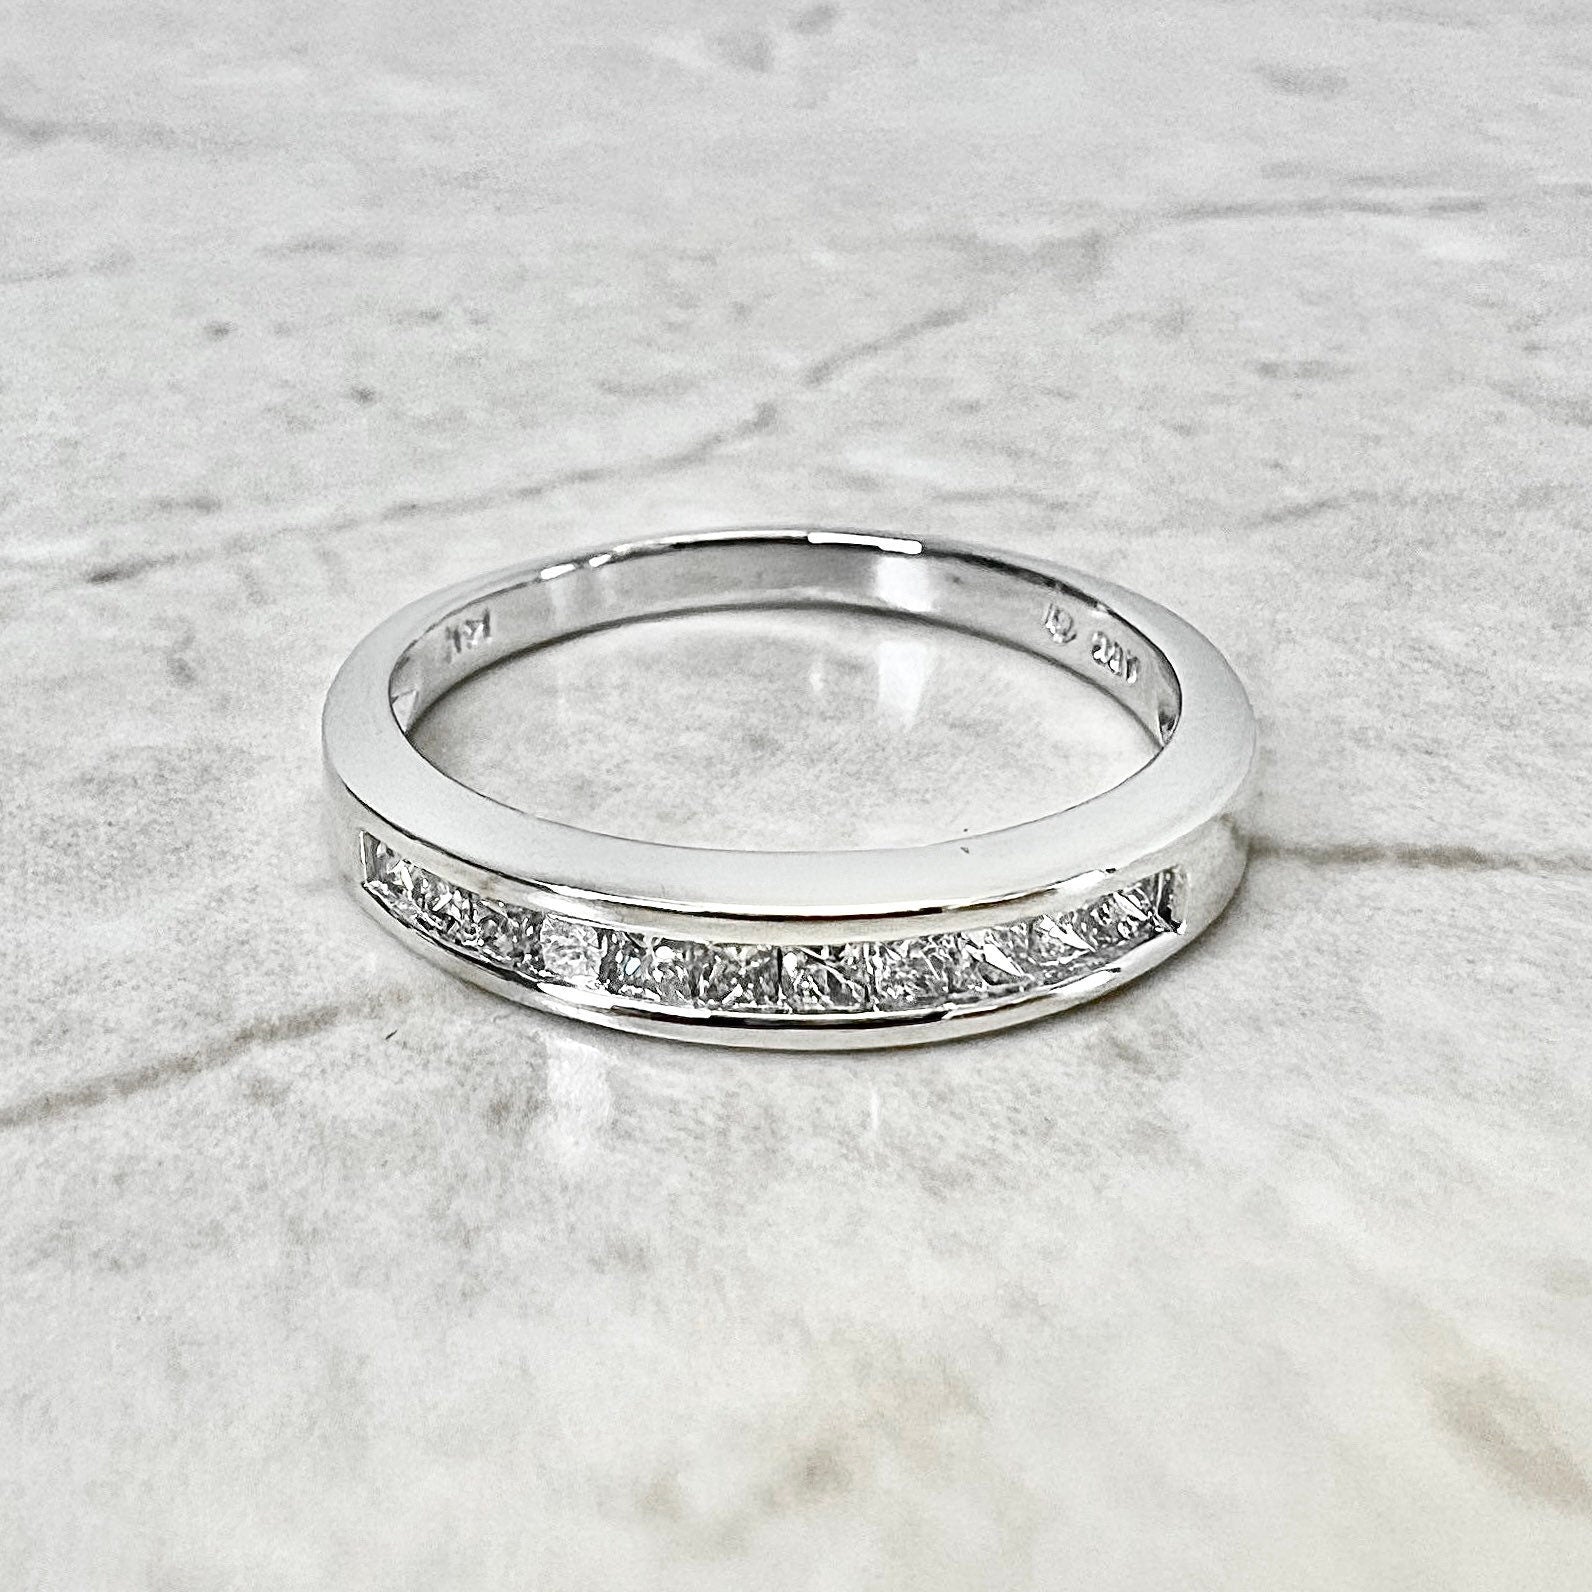 14K Princess Cut Diamond Band Ring - White Gold Diamond Band - Anniversary Ring - Half Eternity Ring - Best Gift For Her